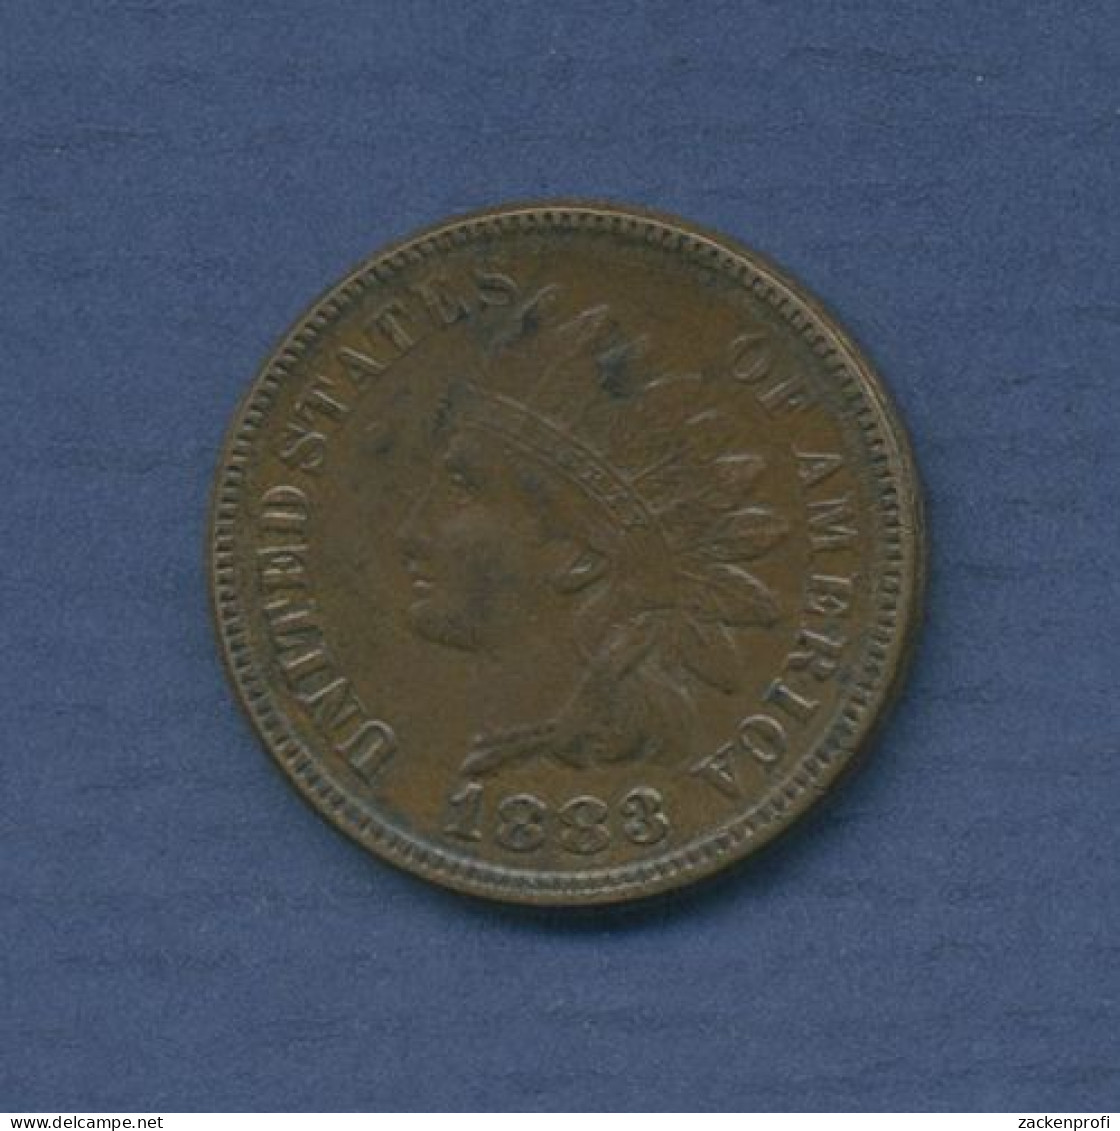 USA Indian Head Cent 1883, KM 90 A, Vz (m3365) - 1859-1909: Indian Head